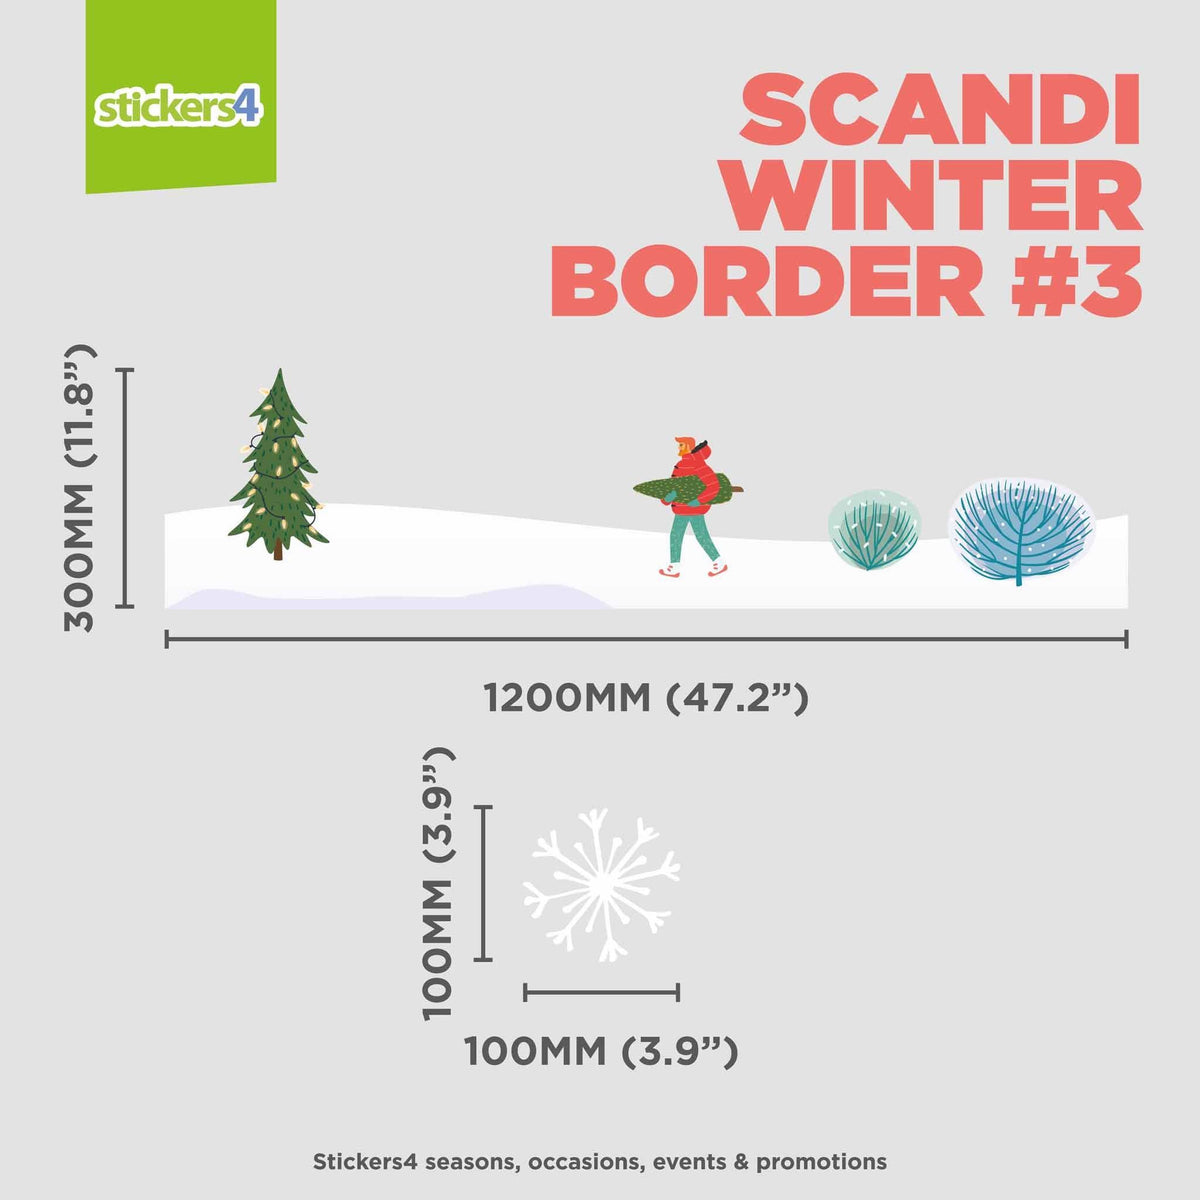 Scandi Winter Border #3 Window Sticker with 36 Snowflakes Christmas Window Display